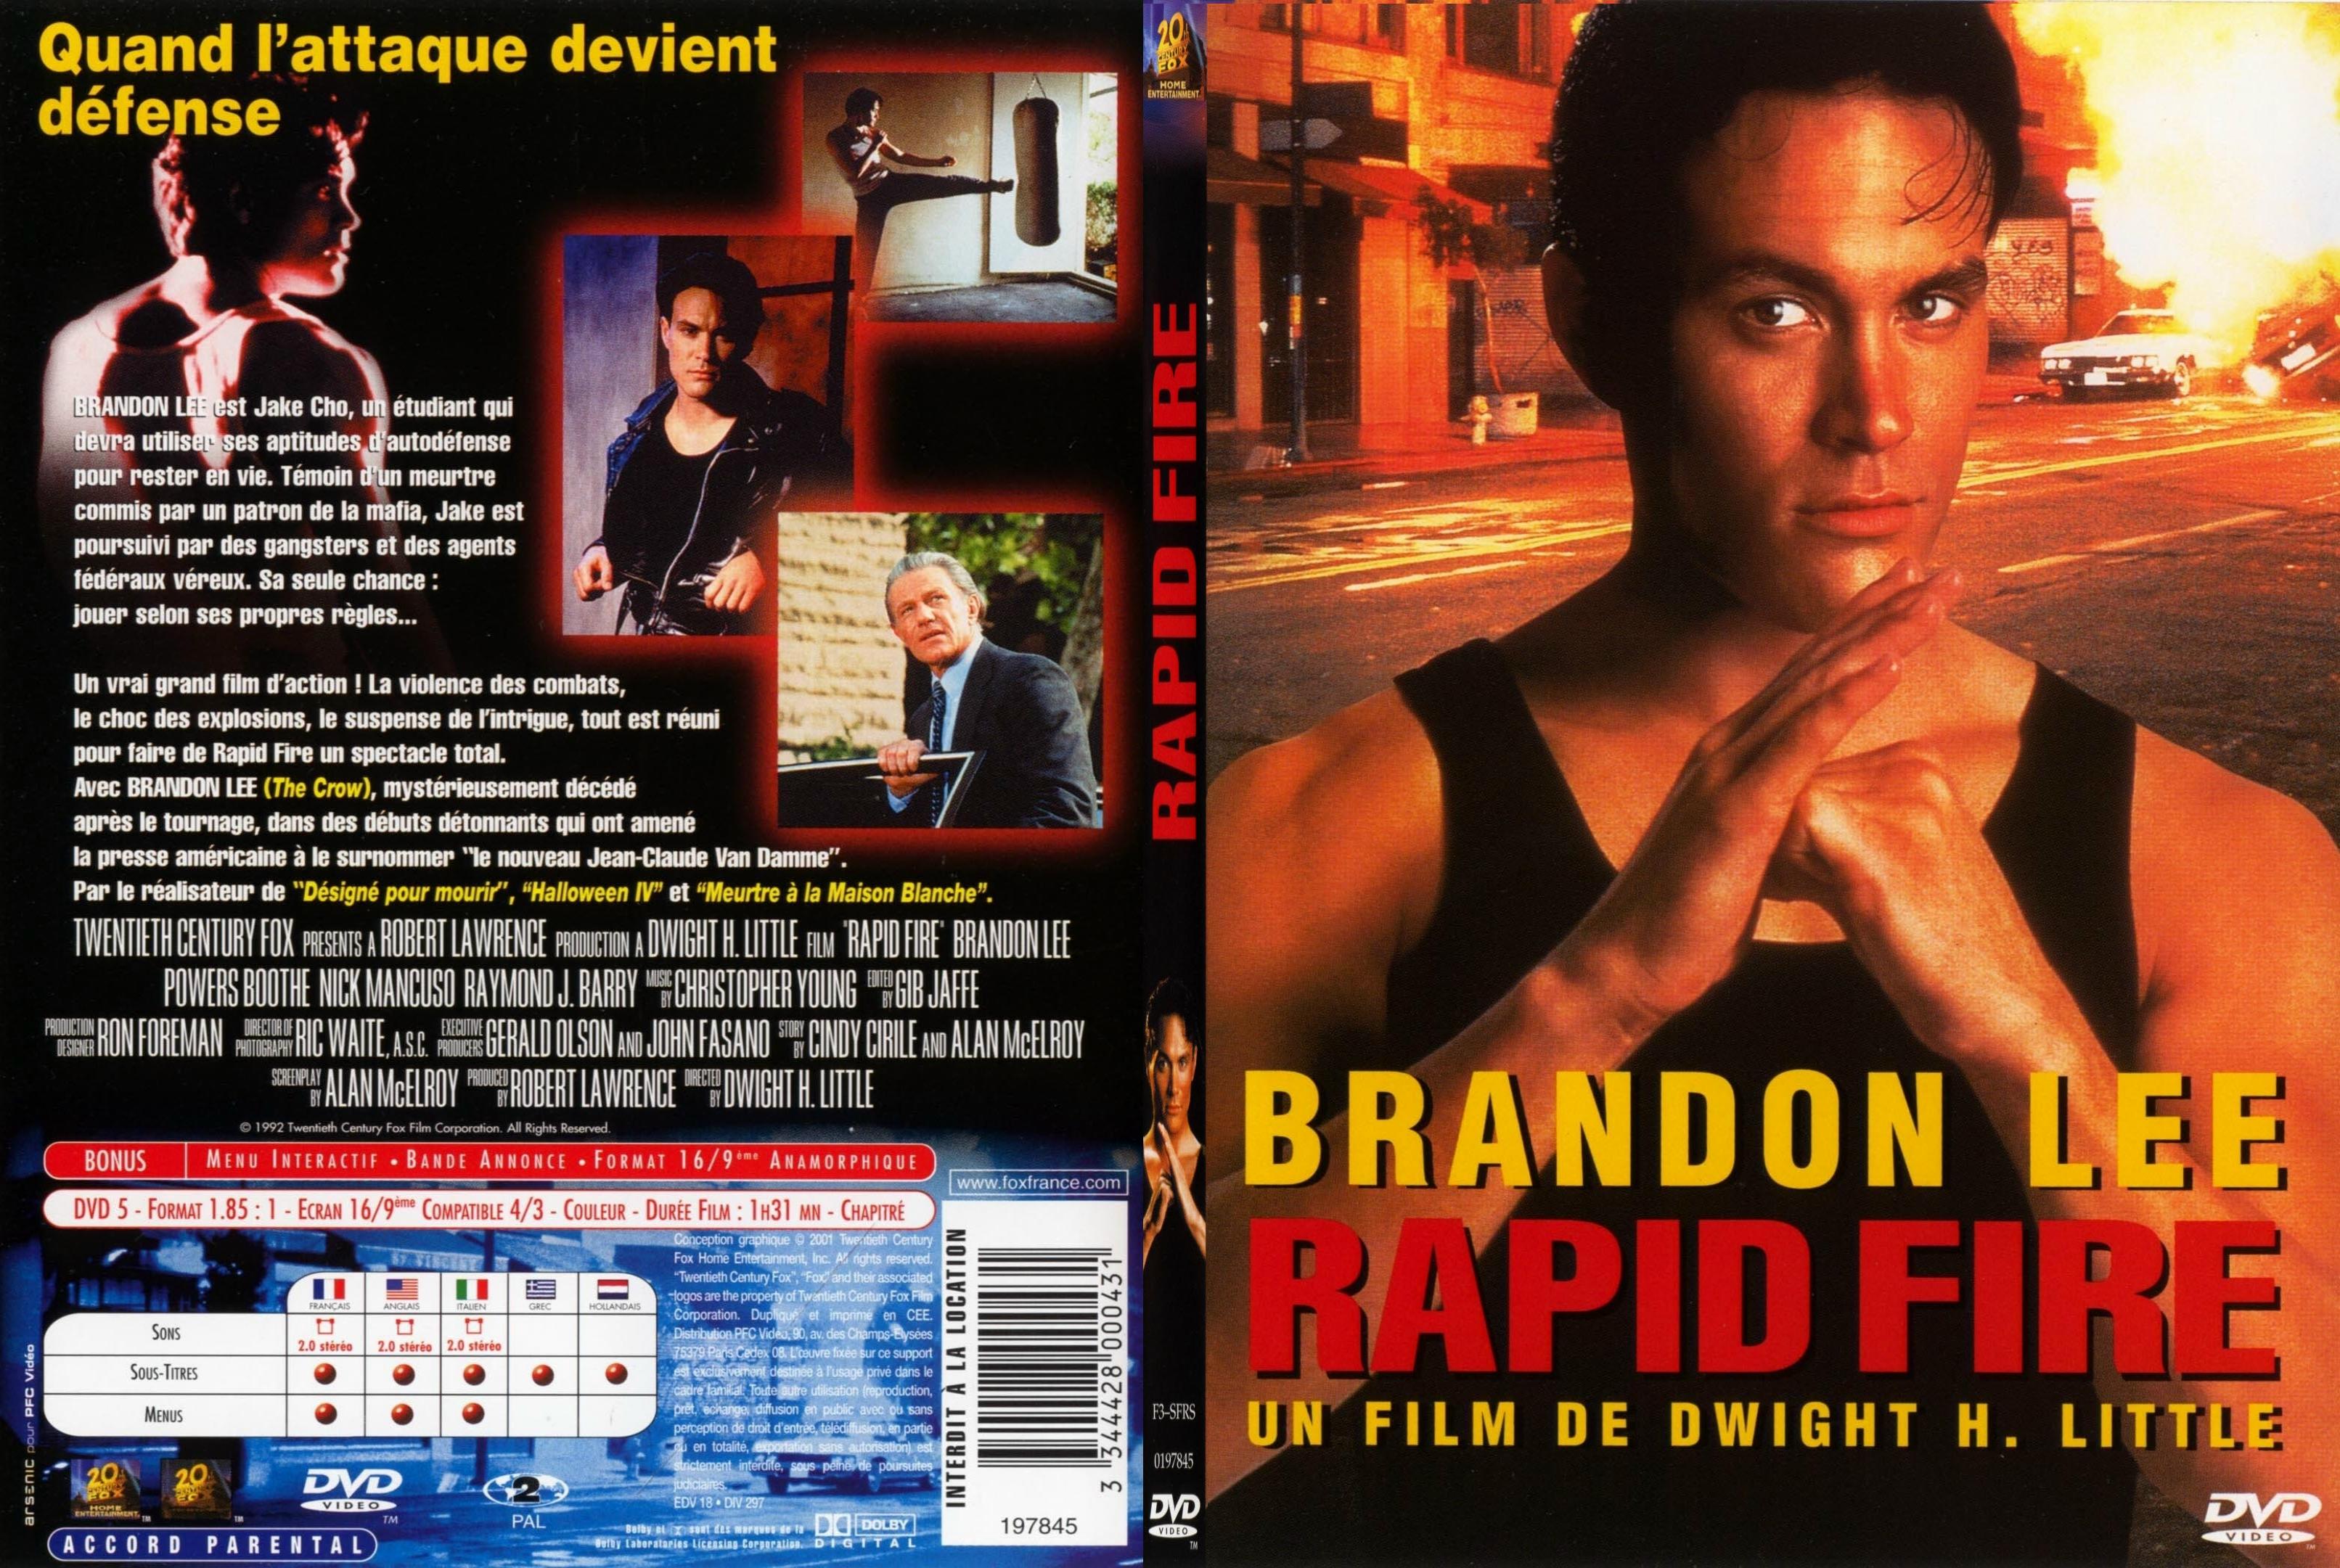 Jaquette DVD Rapid fire - SLIM